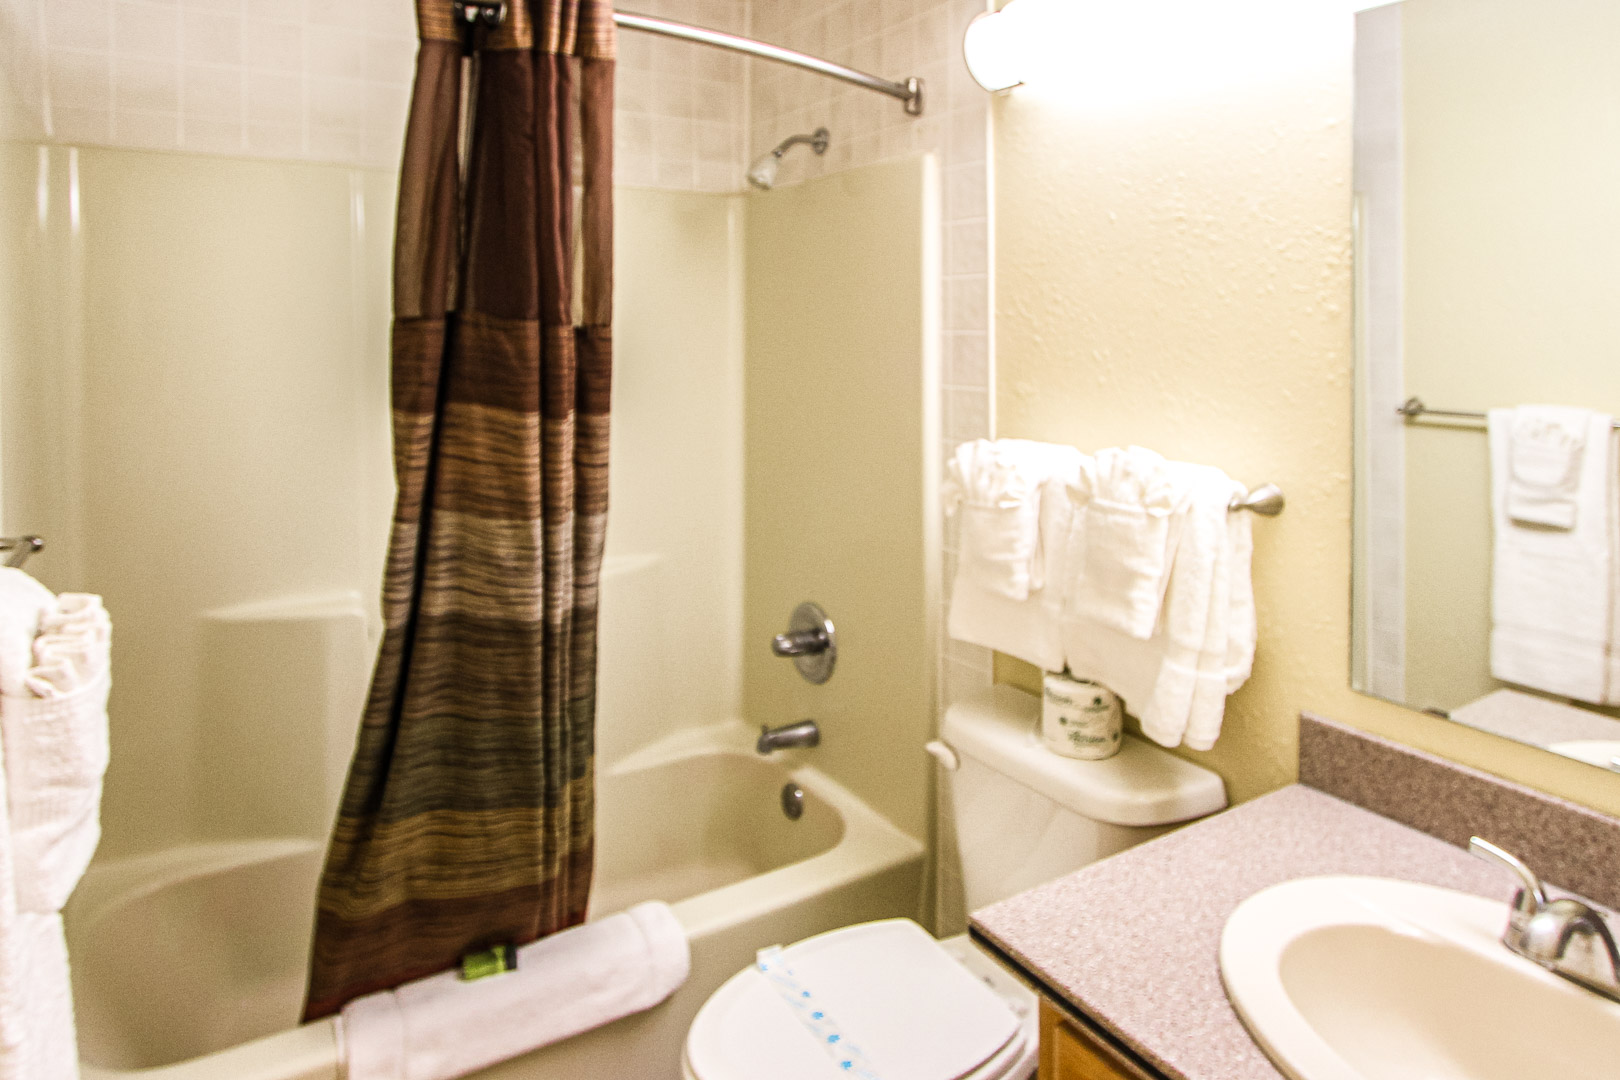 A clean bathroom at VRI's Crown Point Condominiums in New Mexico.